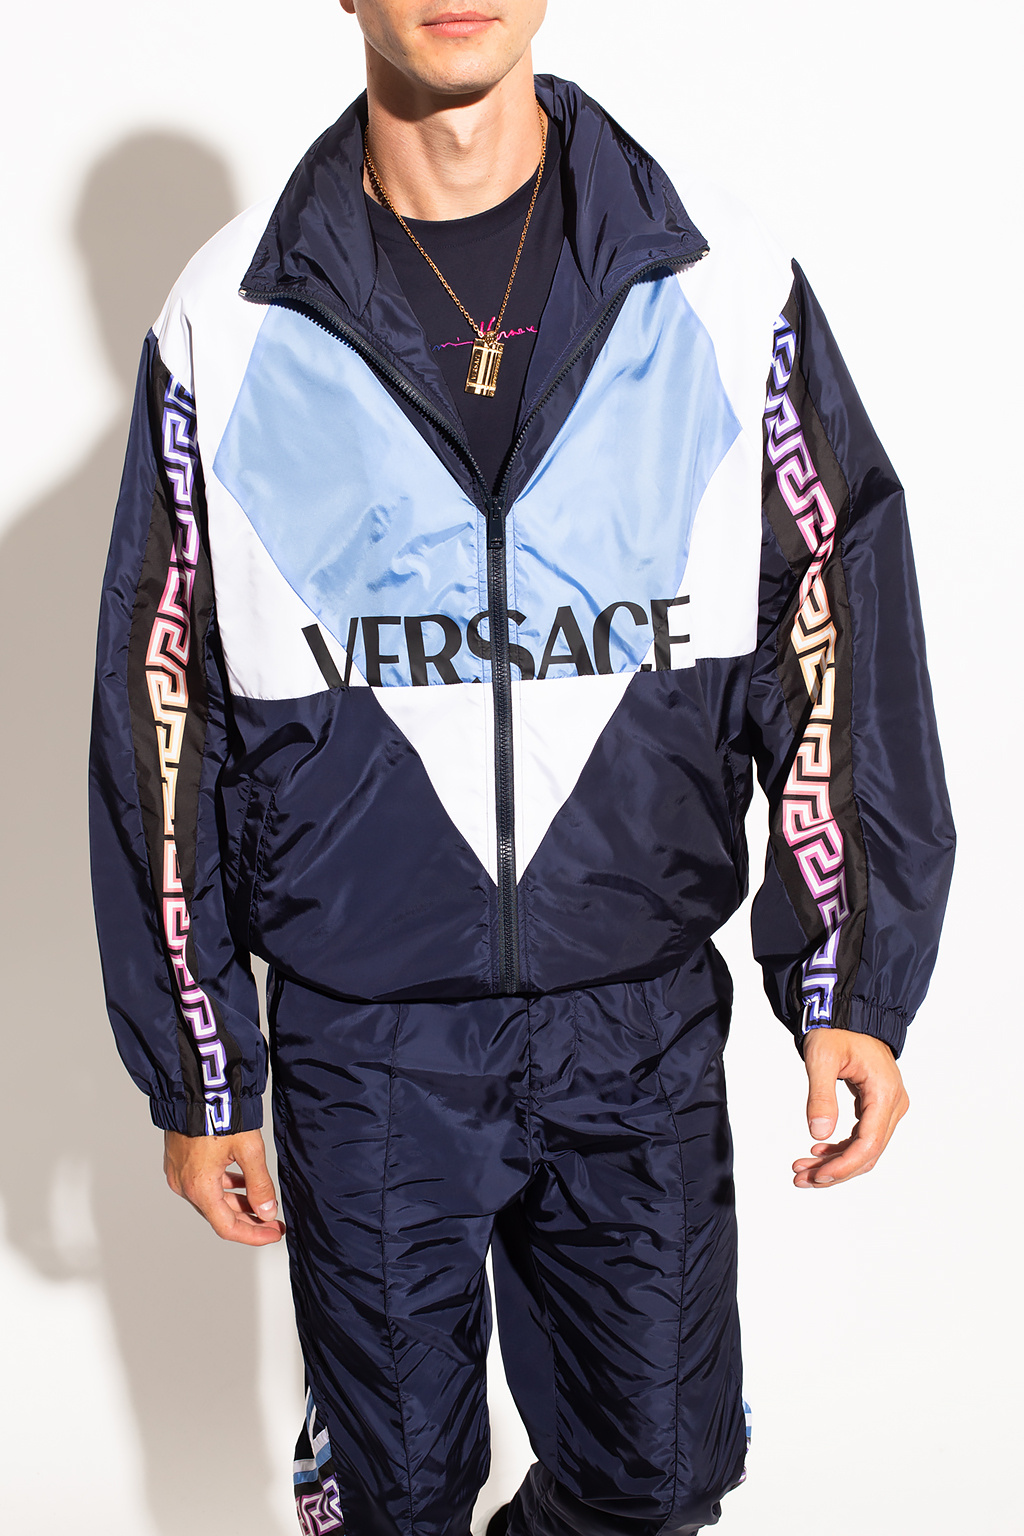 Versace Patterned jacket